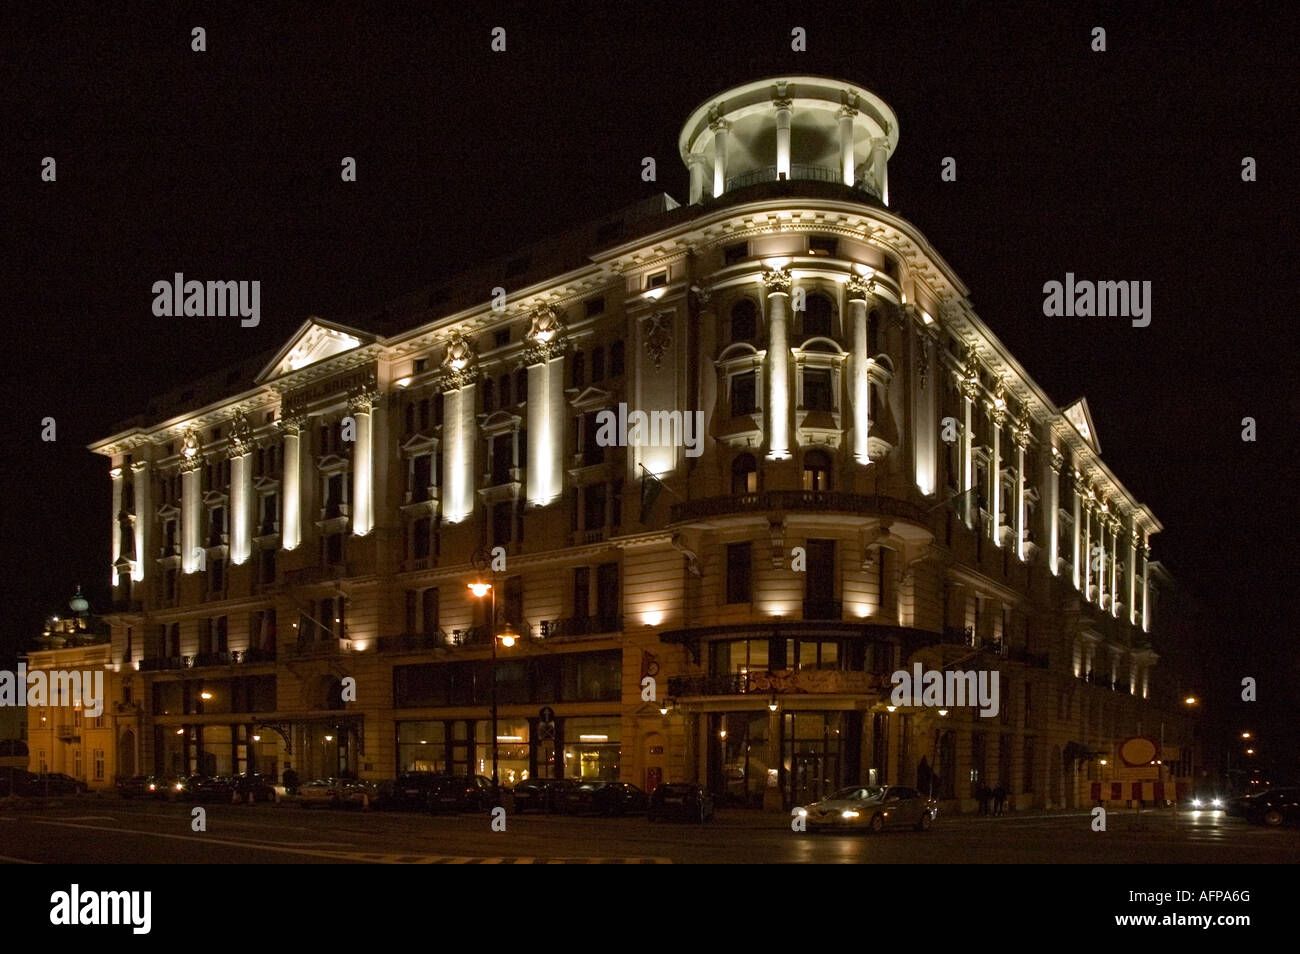 Le Royal Meridien Bristol Hotel at night Warsaw, Warszawa, Poland, Polska, EU, Europe, European Stock Photo